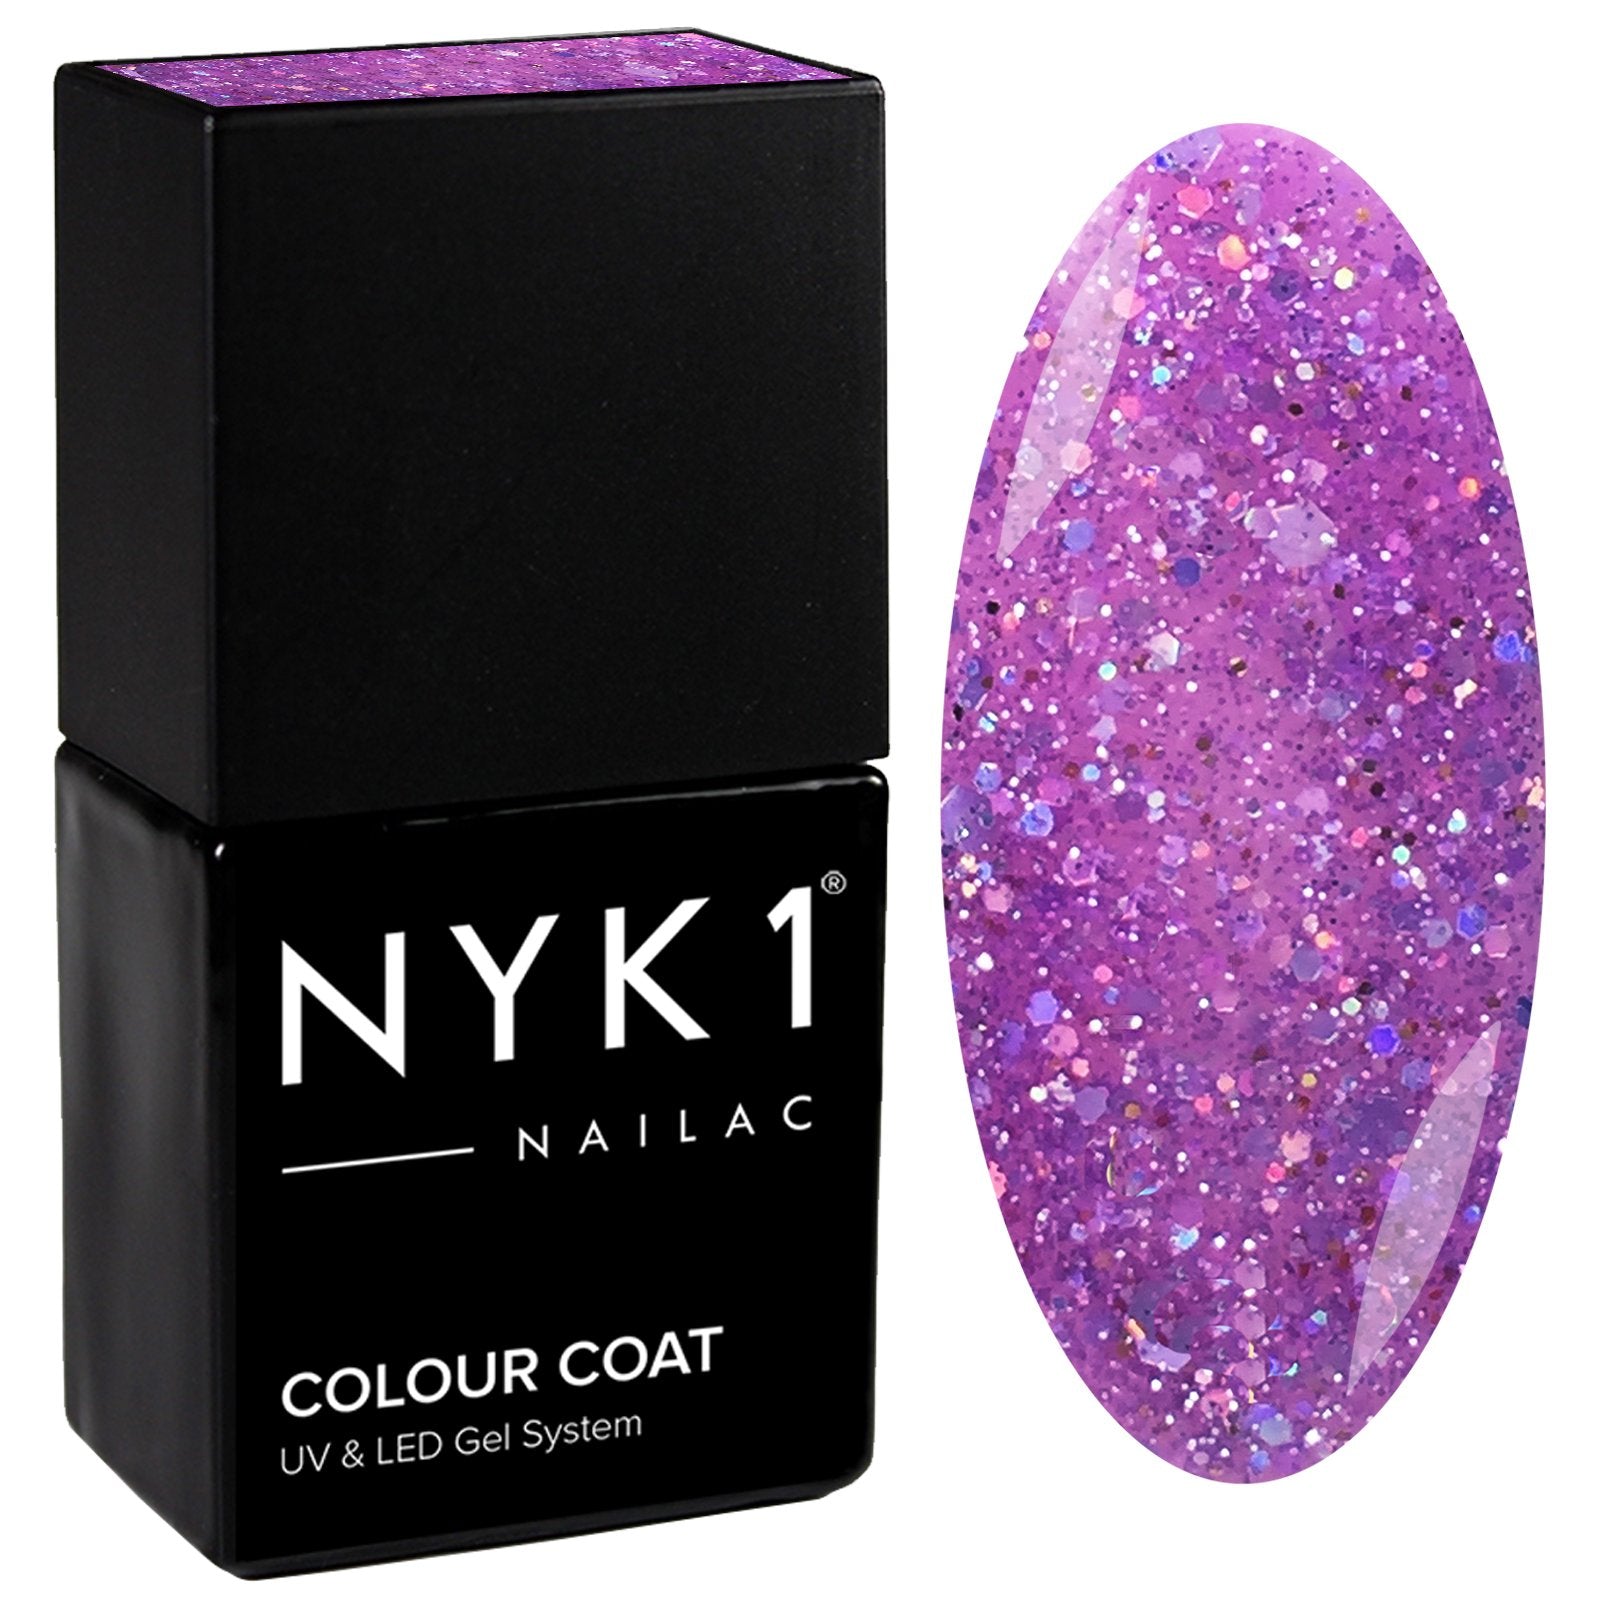 NYK1 Diamond Lilac Purple Glitter Sparkle Gel Nail Polish